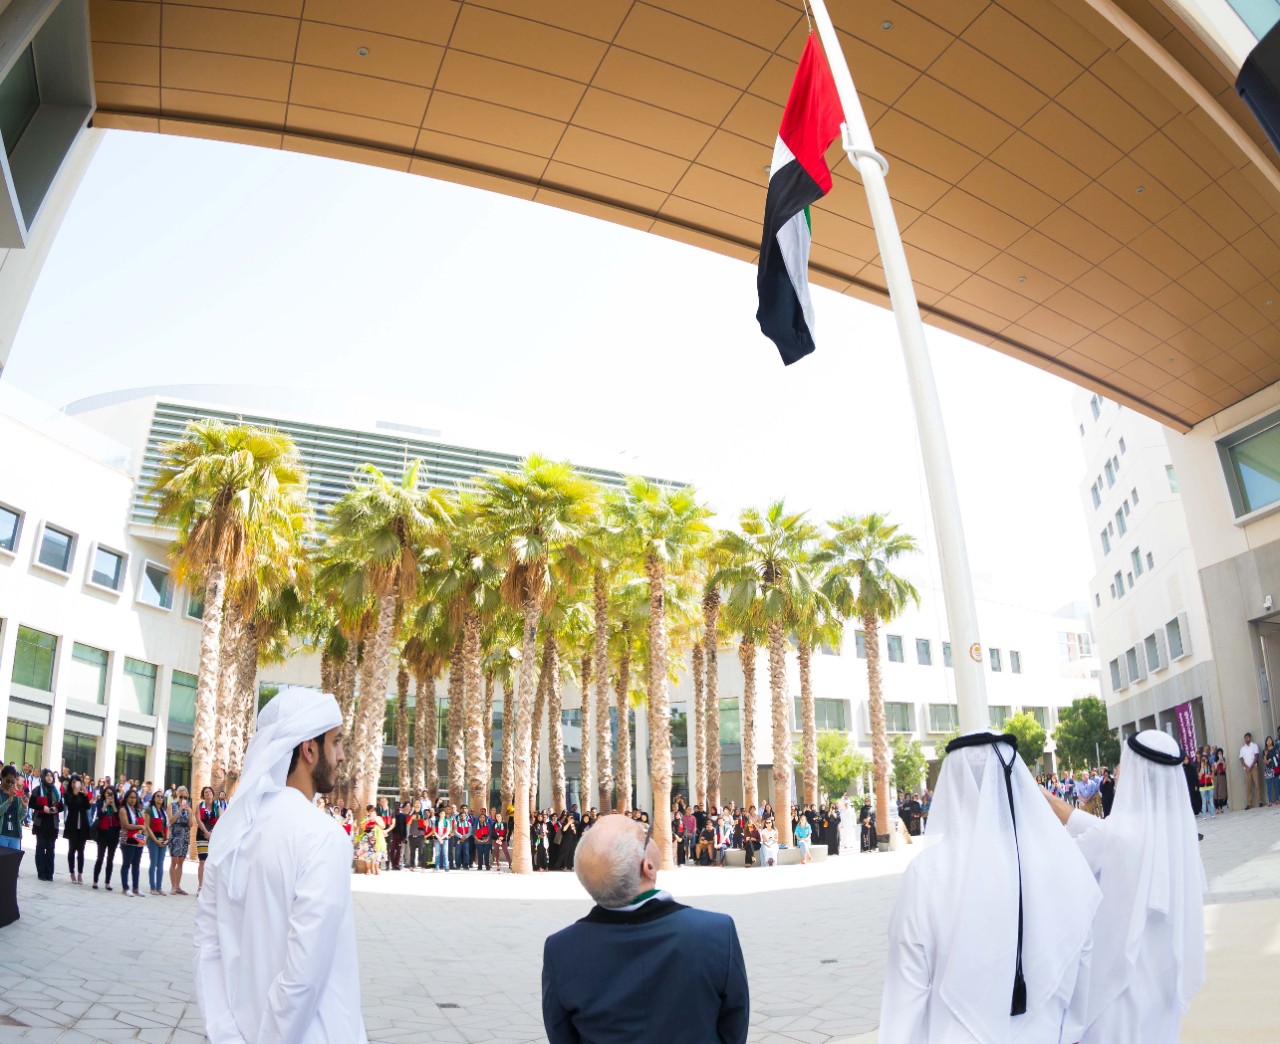 NYUAD_UAE Flag Day 1.jpg